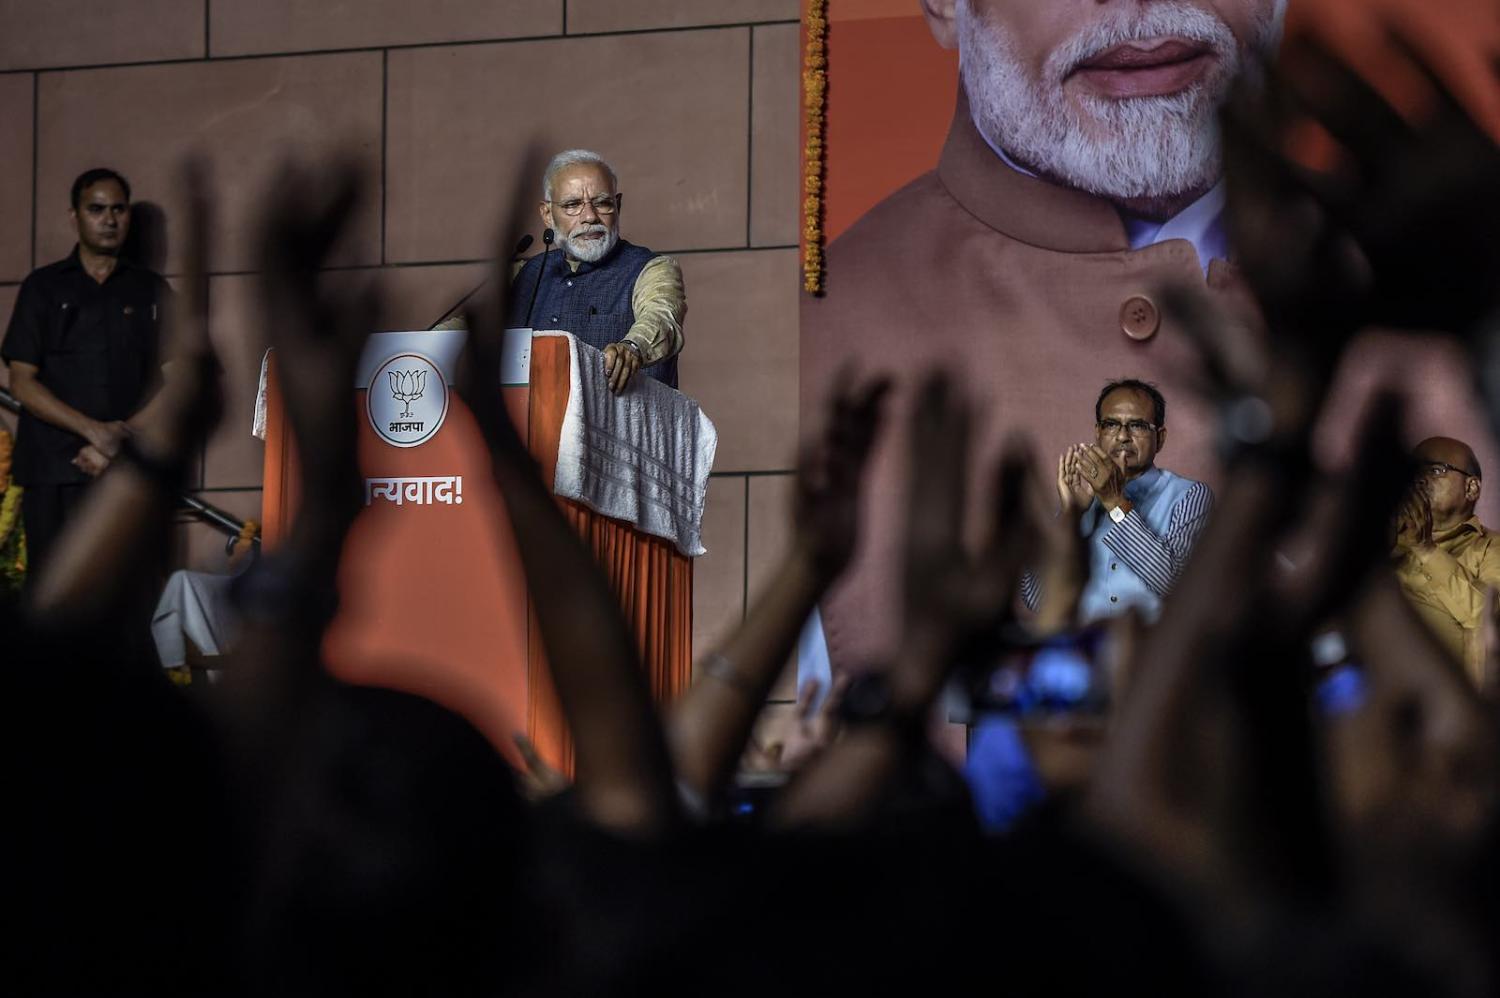 Celebrating a big win - Narendra Modi, India’s Prime Minister (Photo: Atul Loke/Getty)